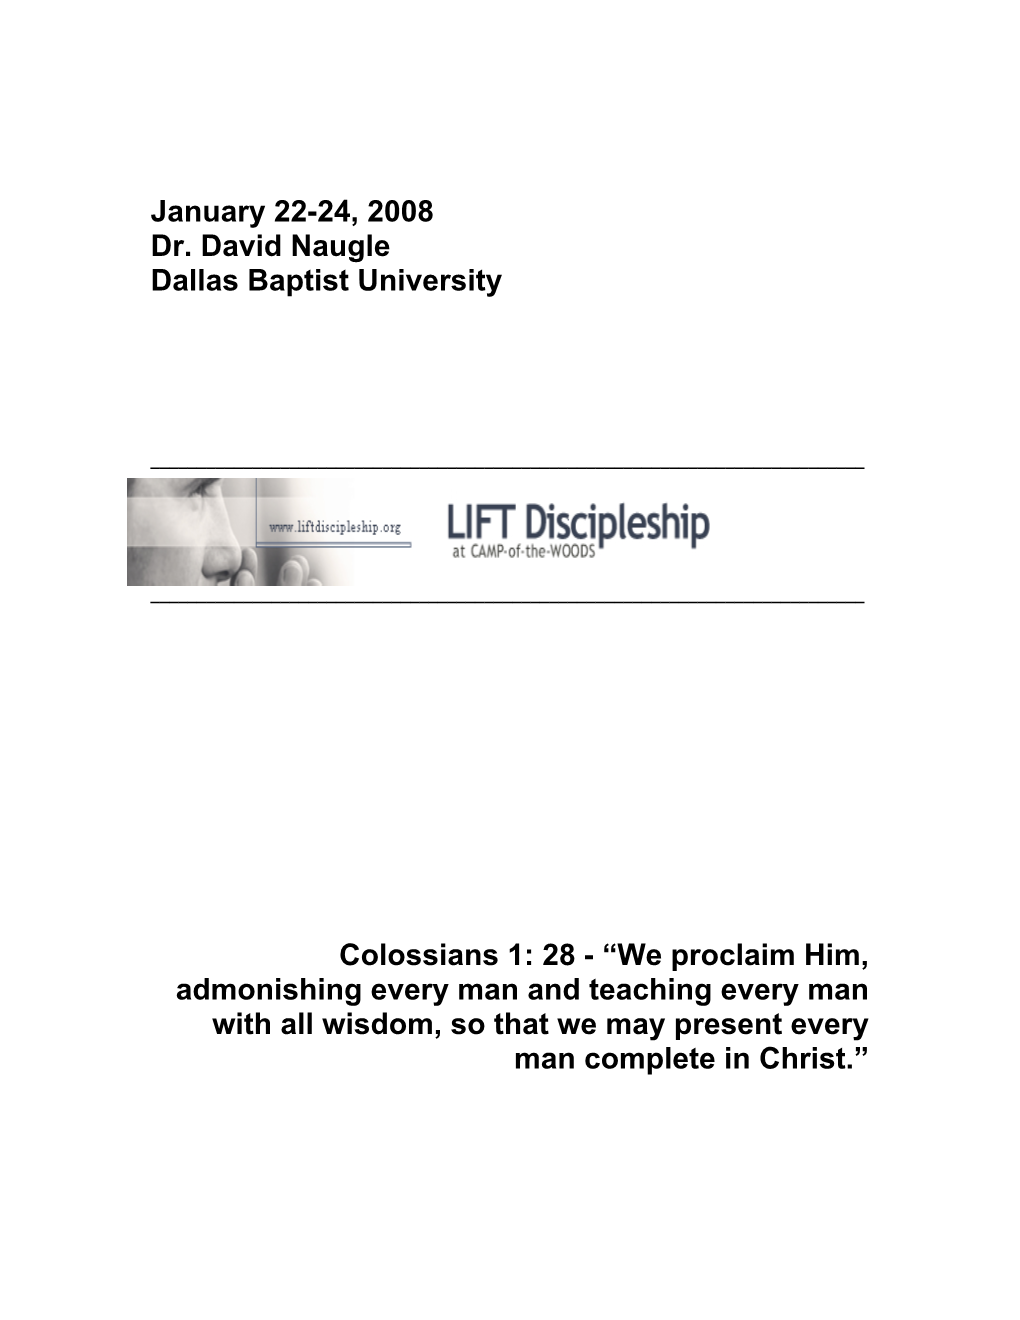 January 22-24, 2008 Dr. David Naugle Dallas Baptist University